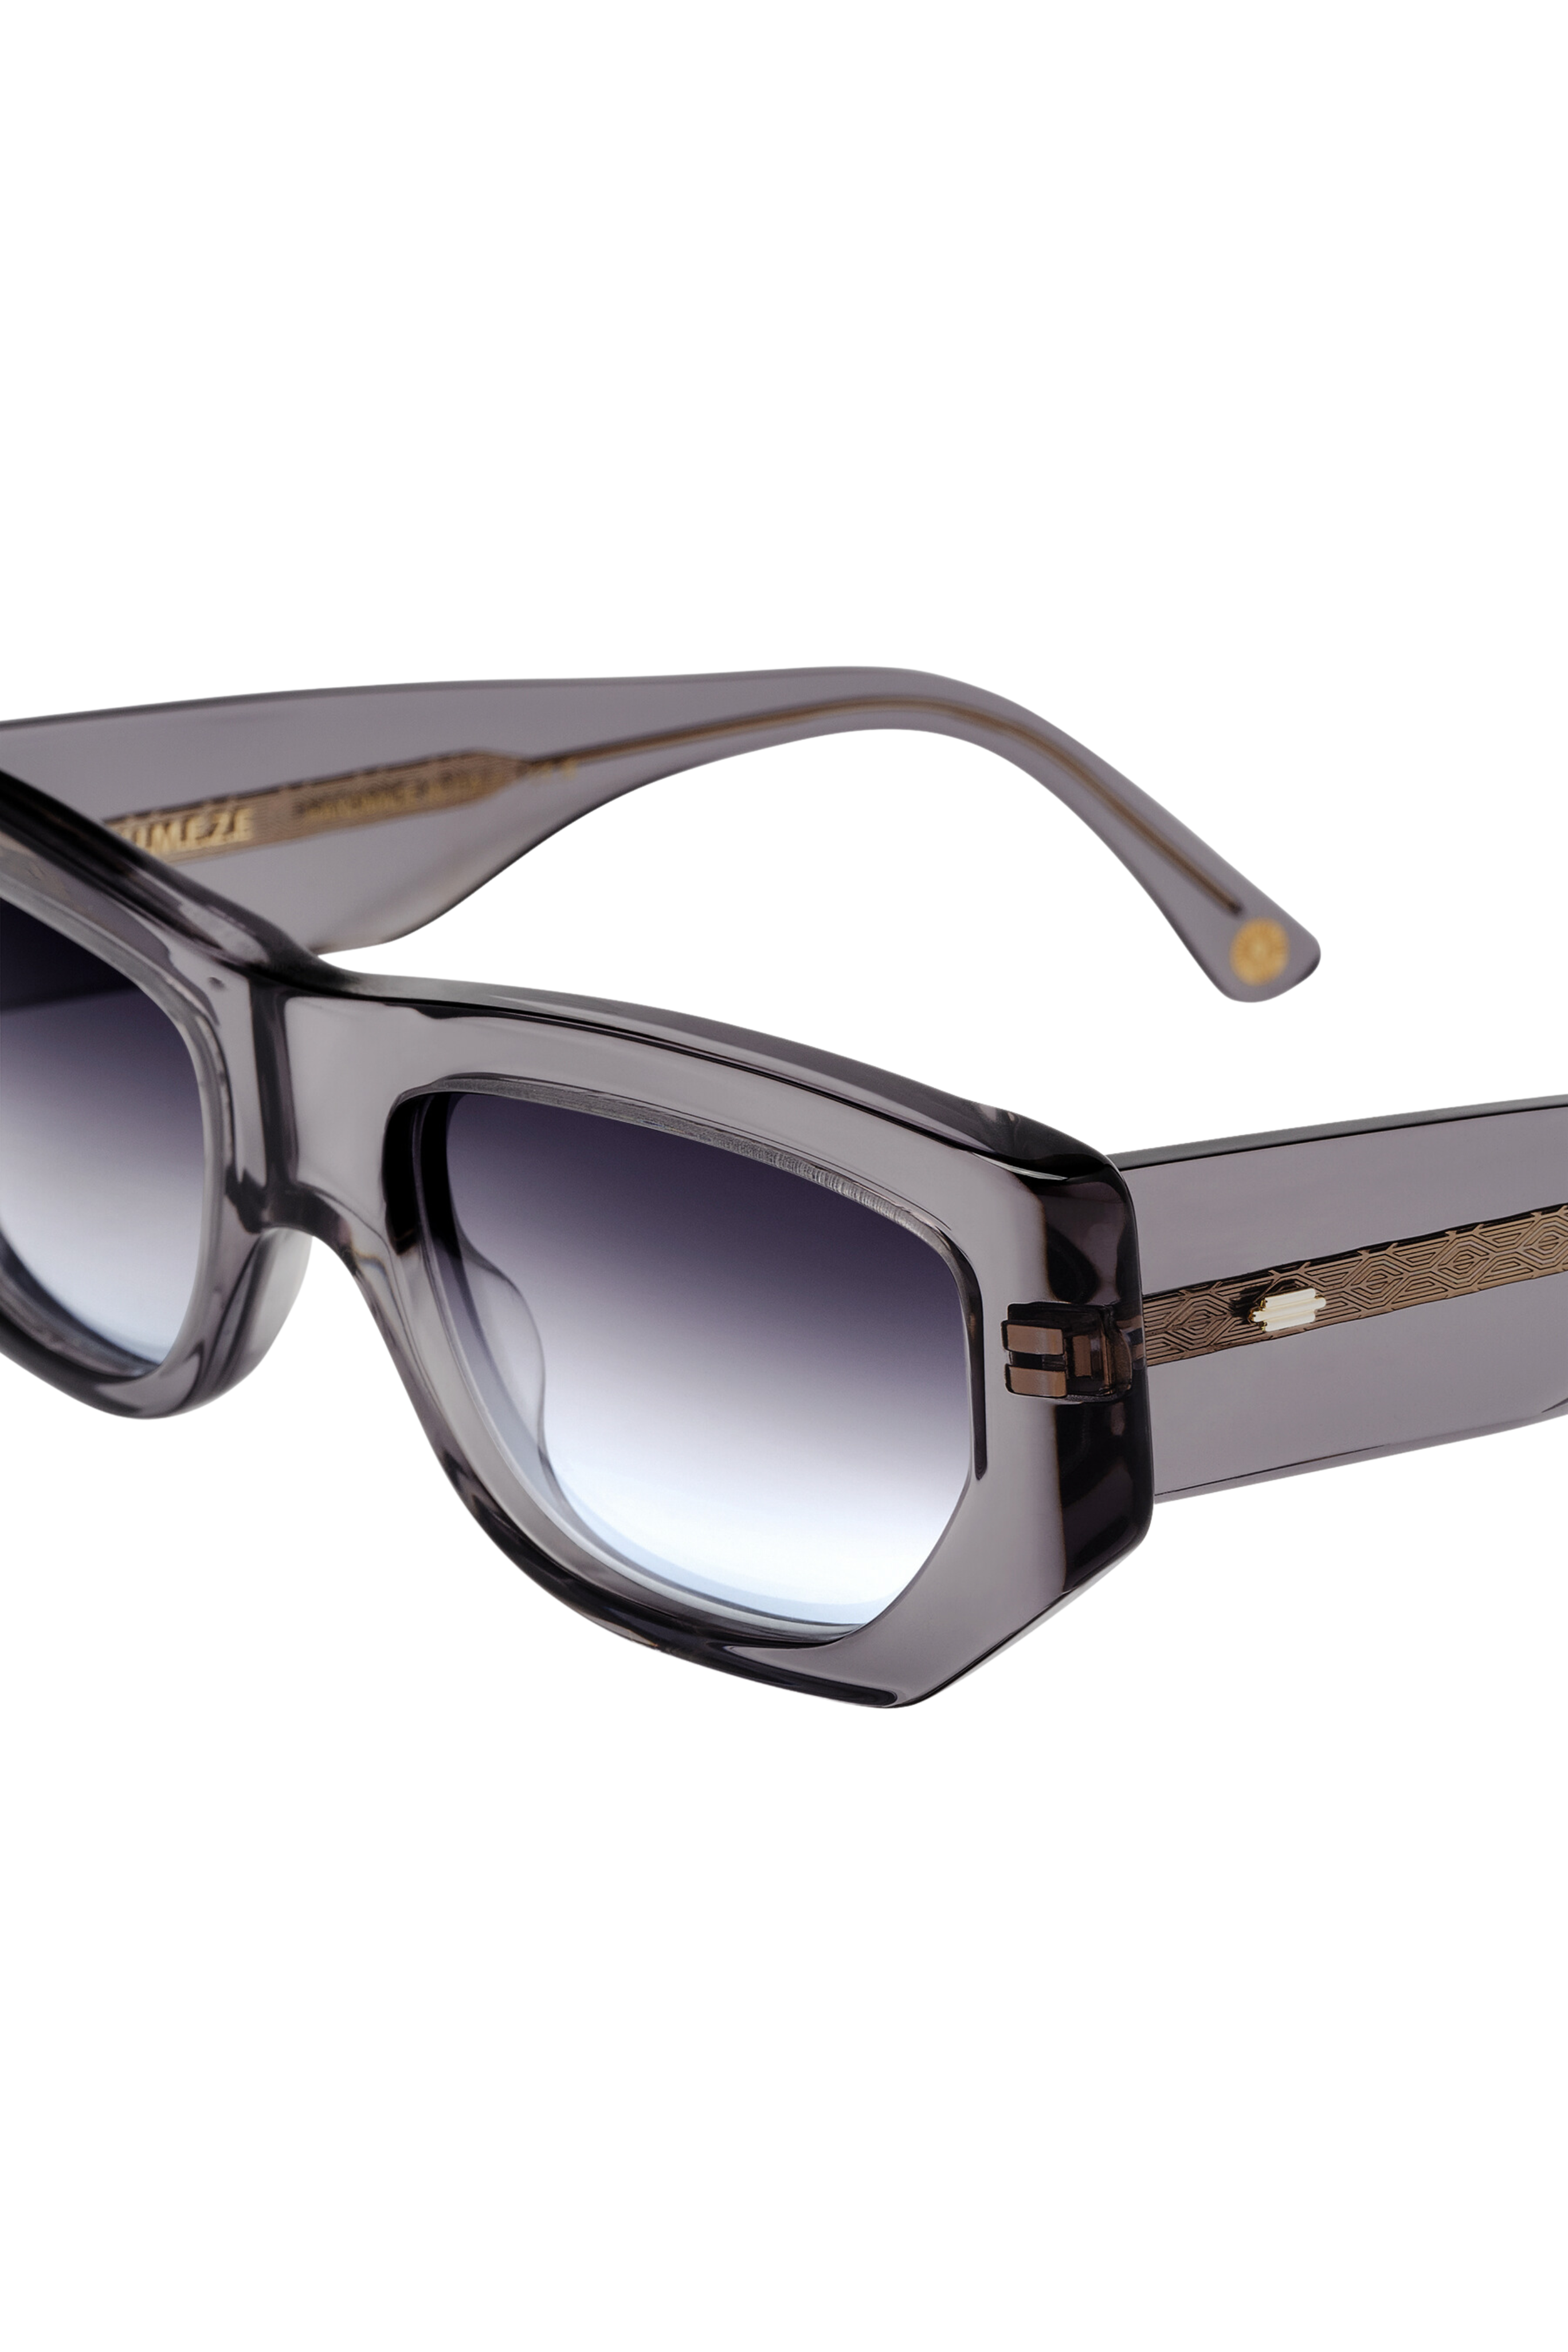 KIMEZE Concept 1 Grey Sunglasses